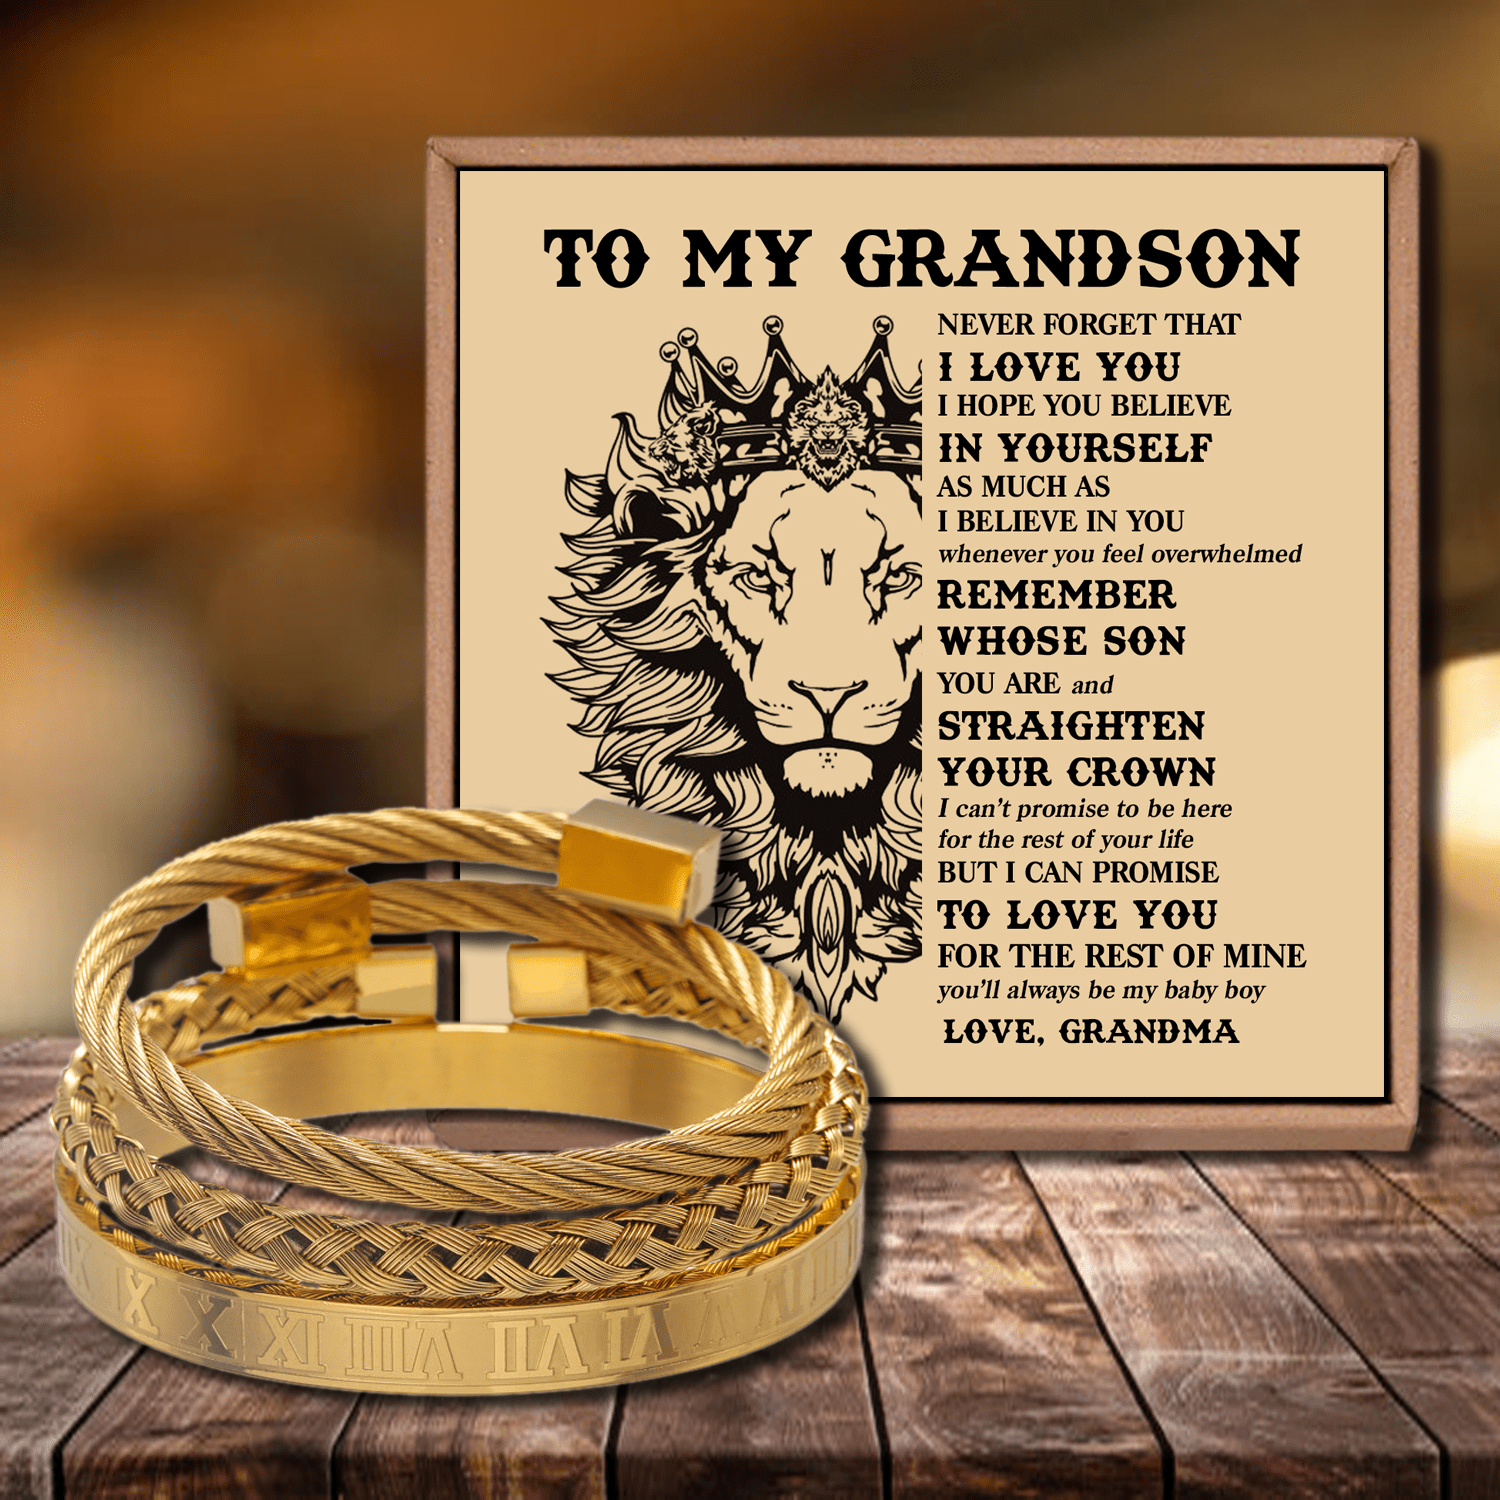 Bracelets Grandma To Grandson - Straighten Your Crown Roman Numeral Bracelet Set Gold GiveMe-Gifts